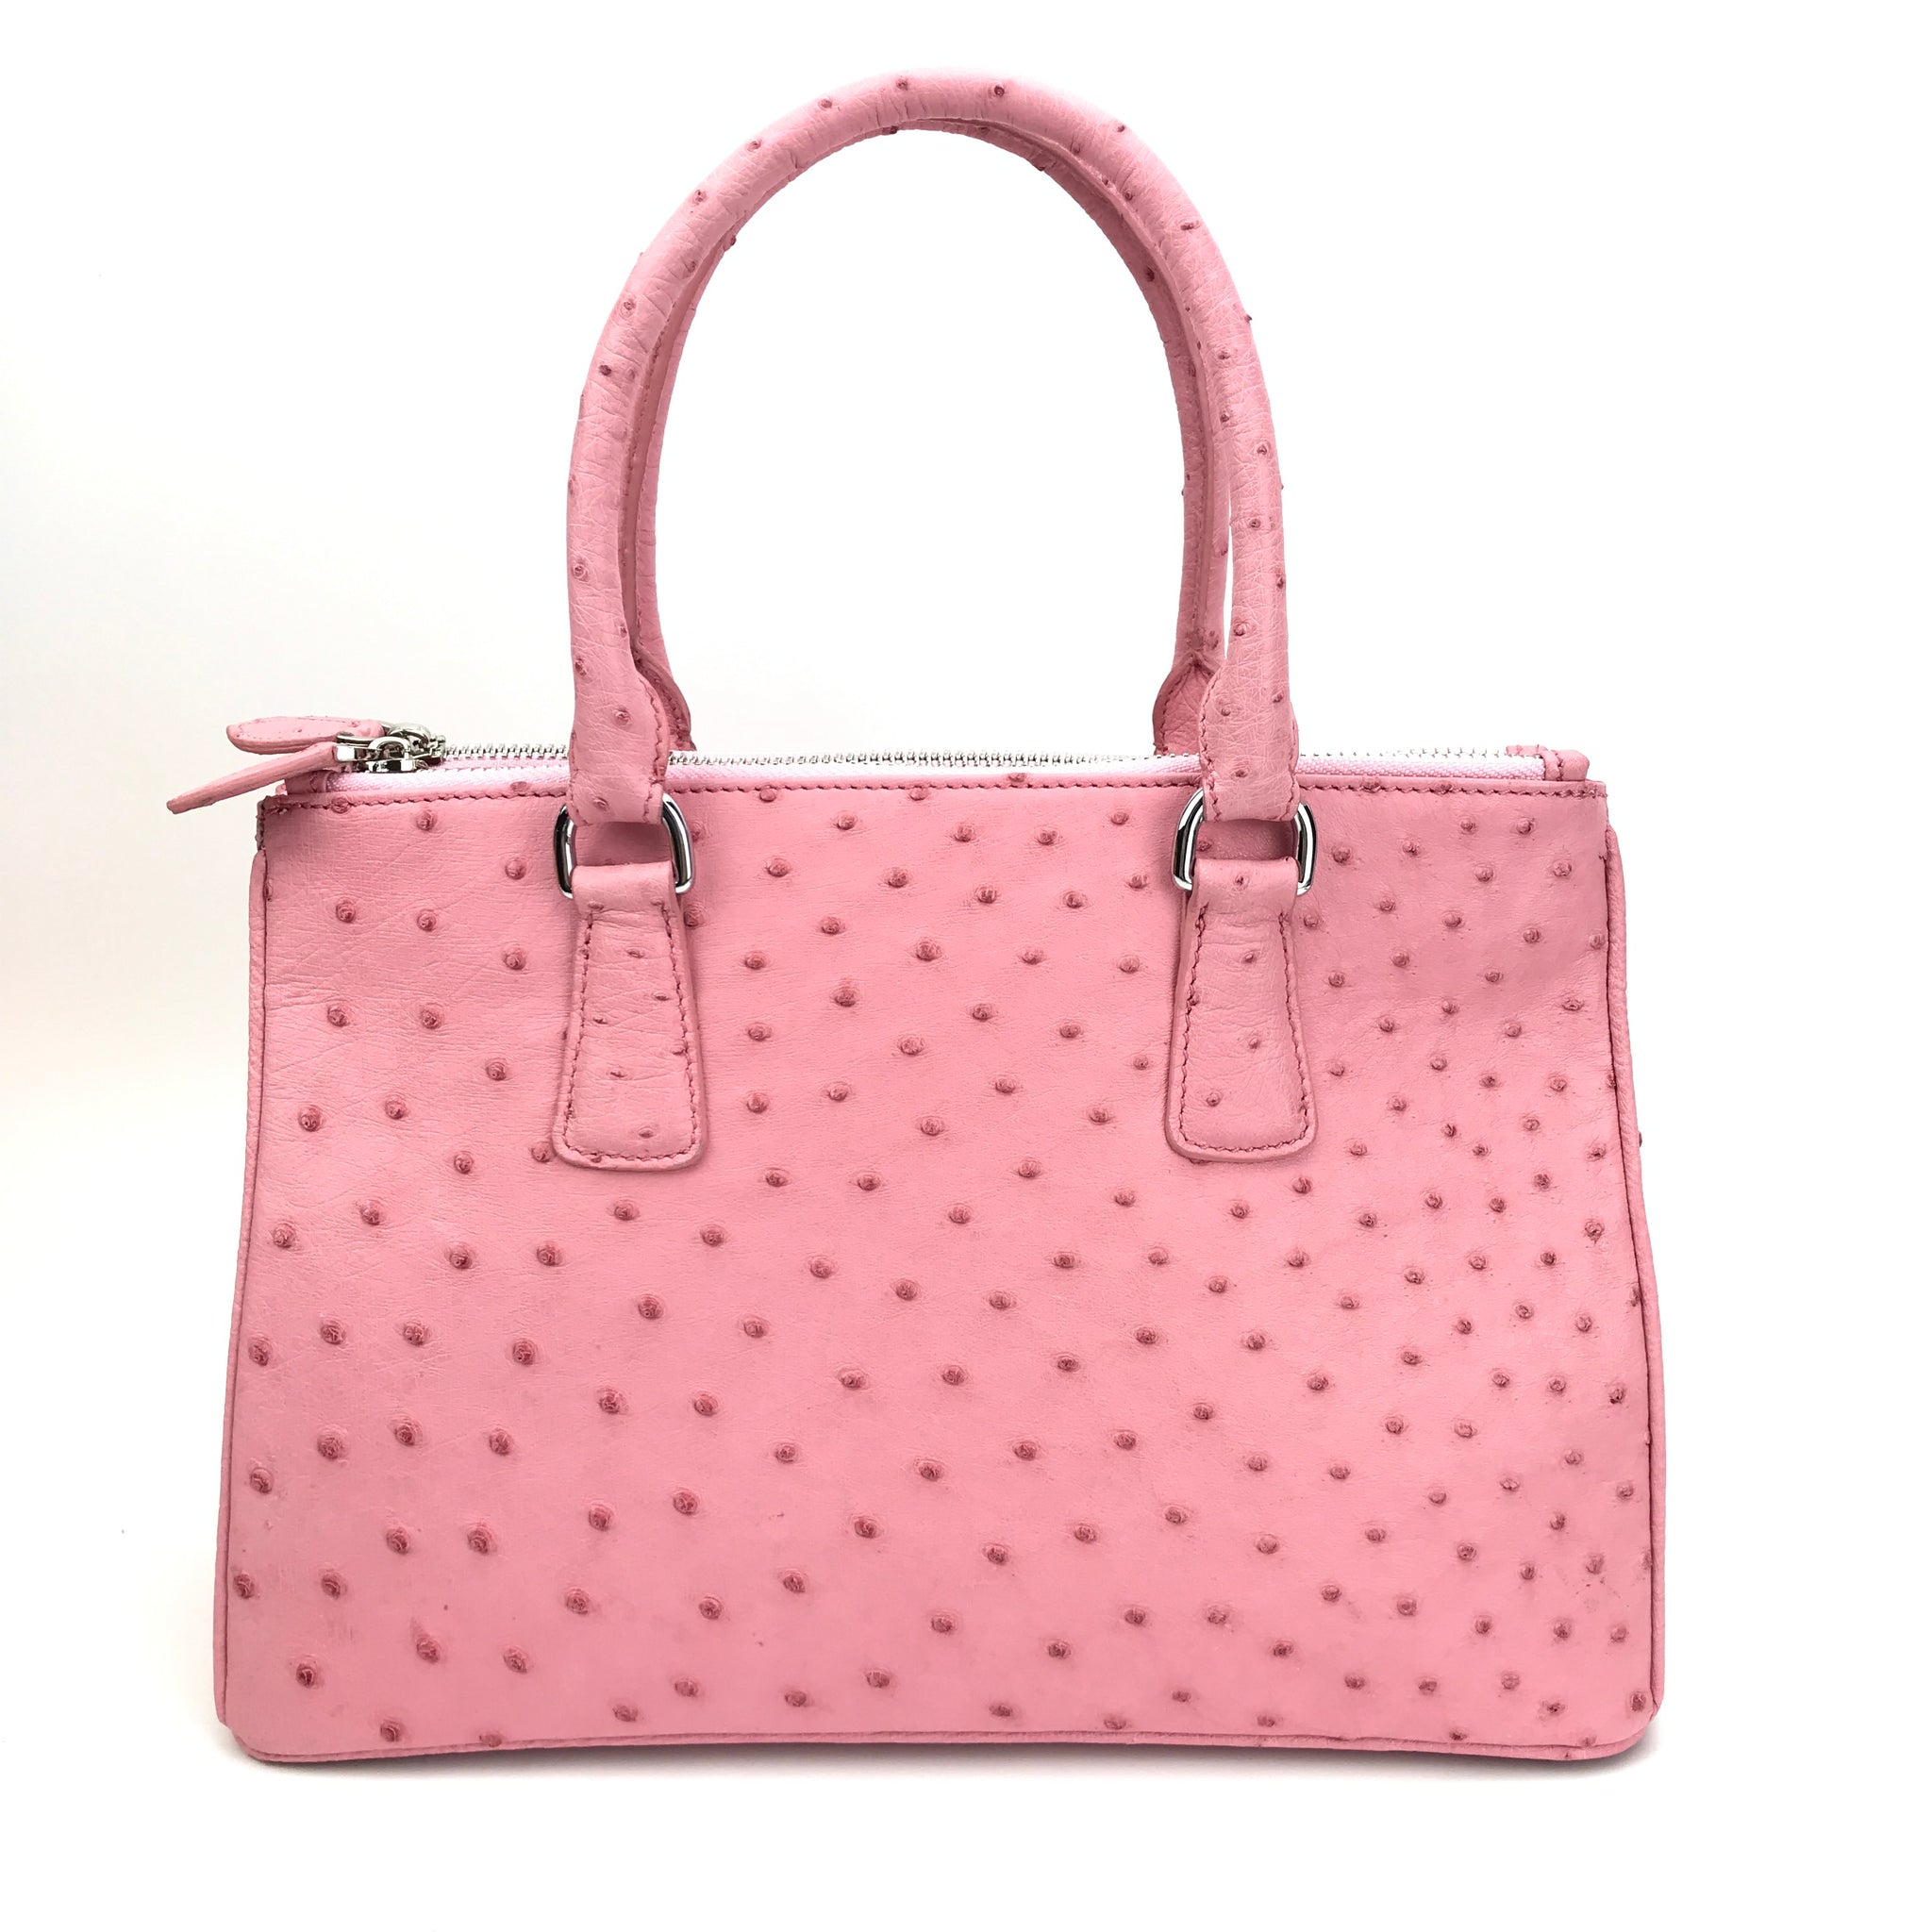 Ostrich skin handbag in Pink color – Lotus Gallery